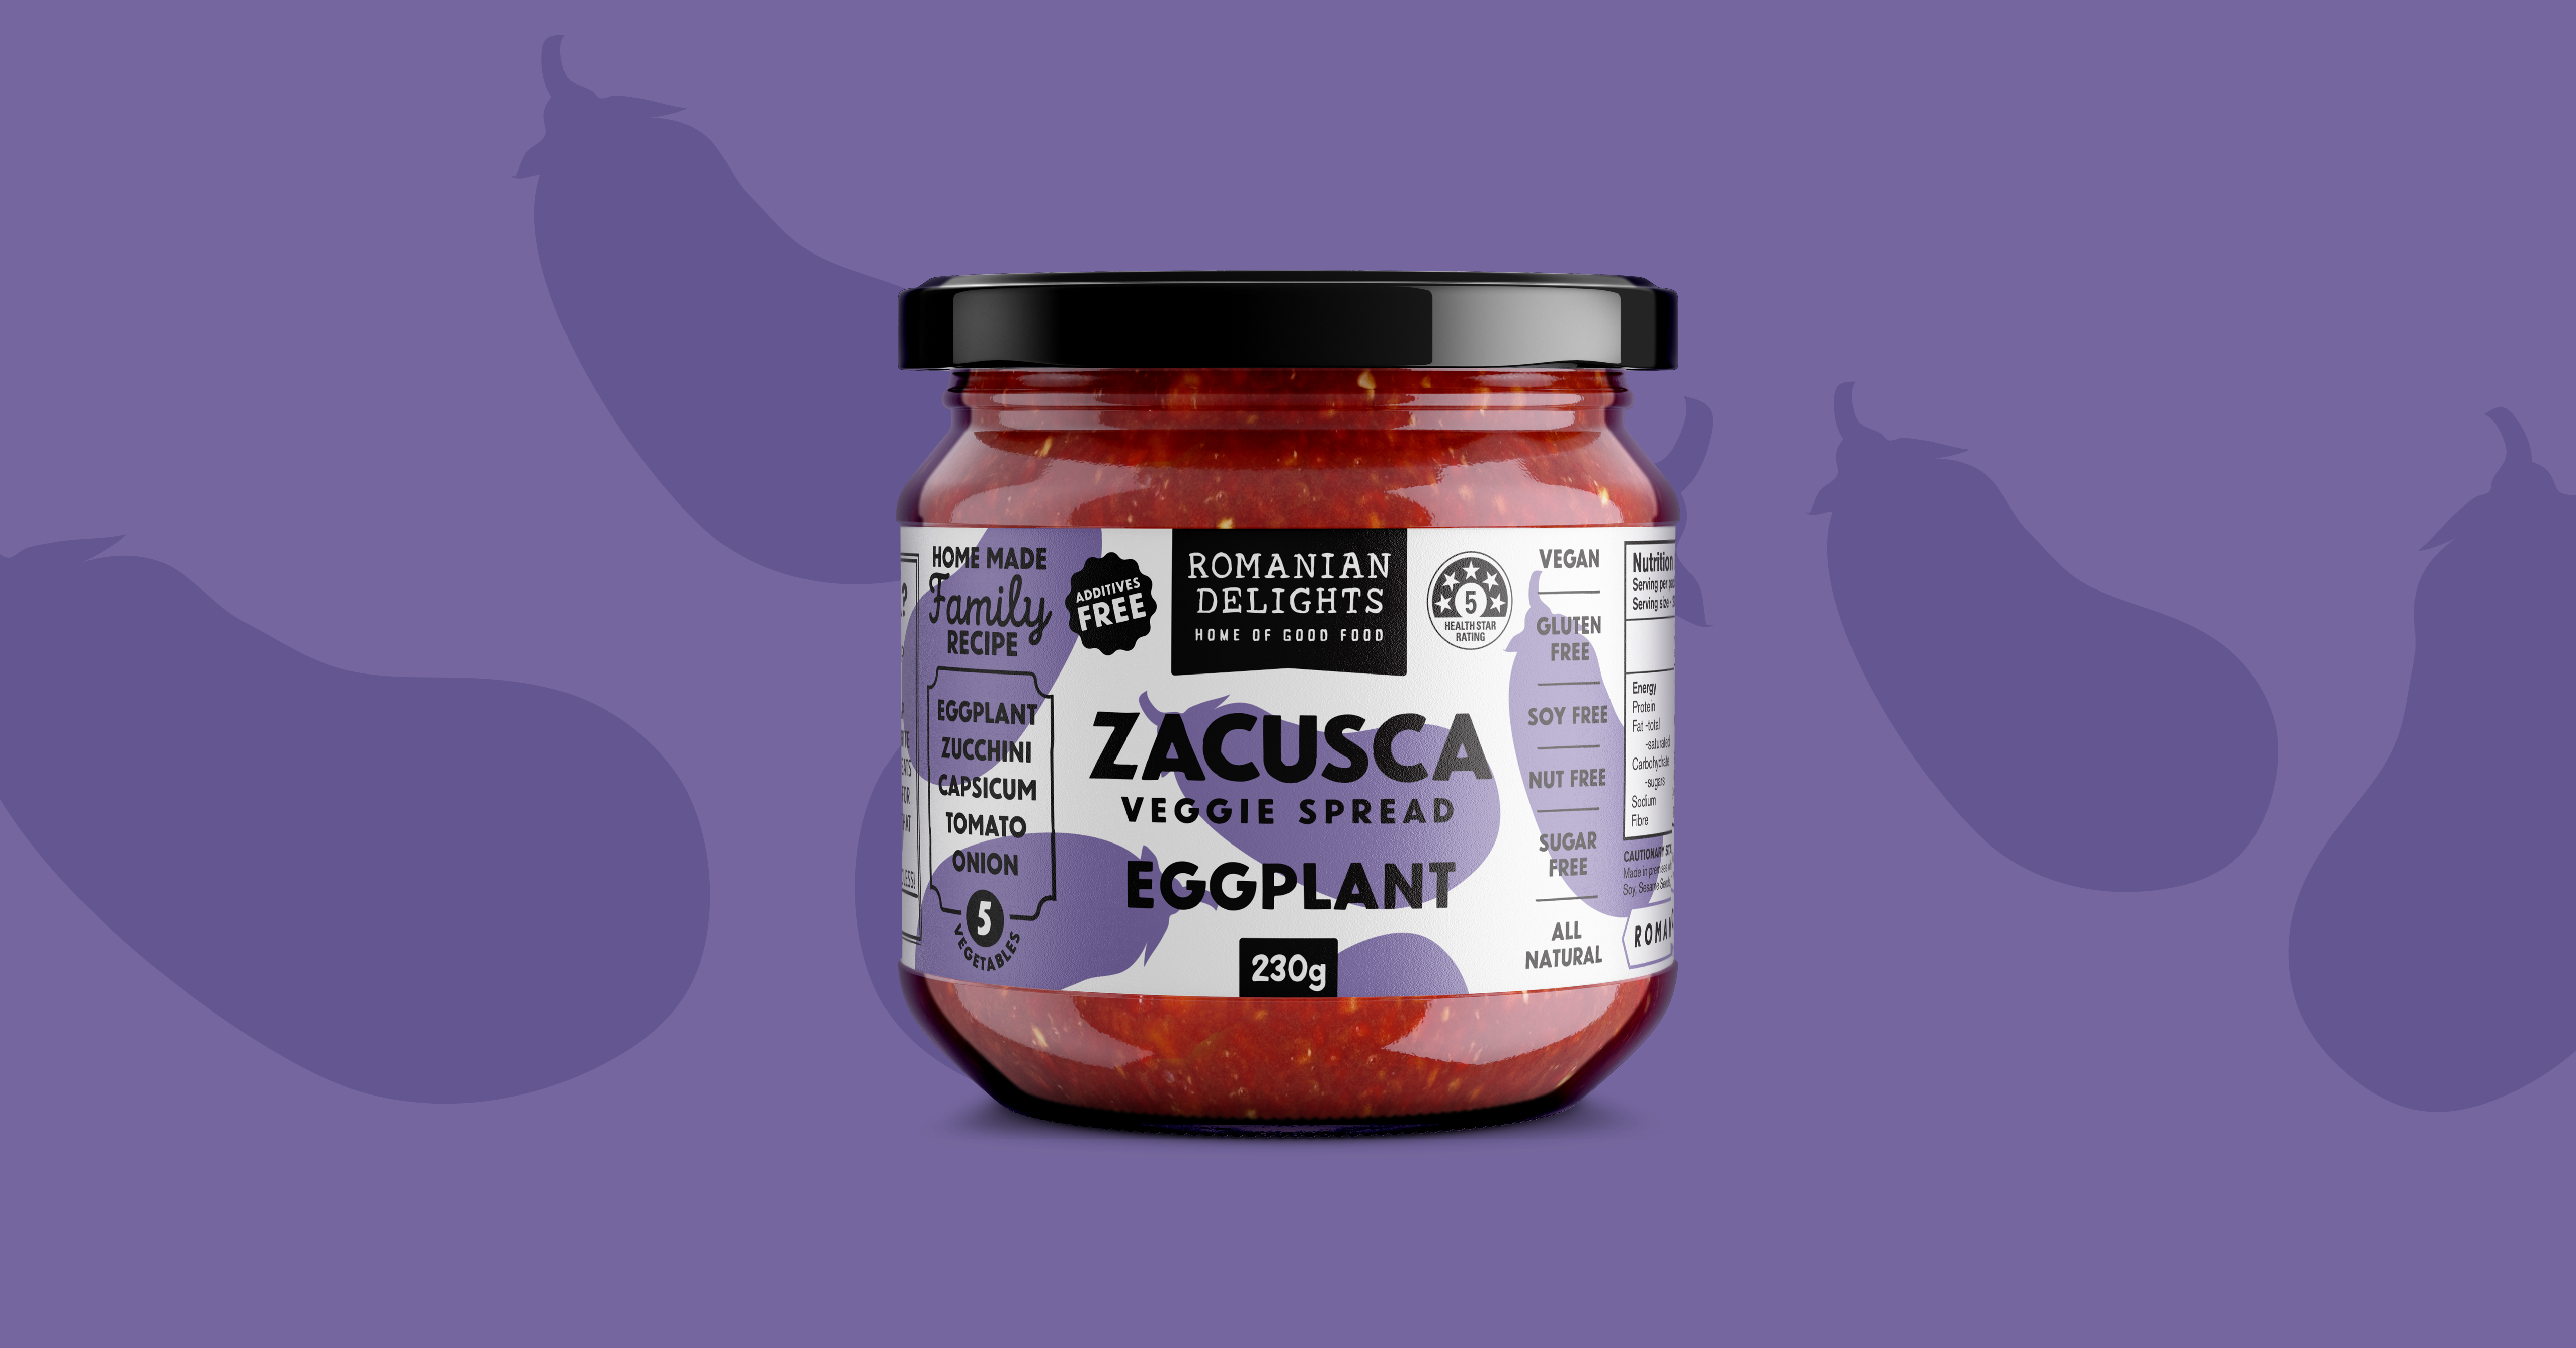 zacusca_eggplant